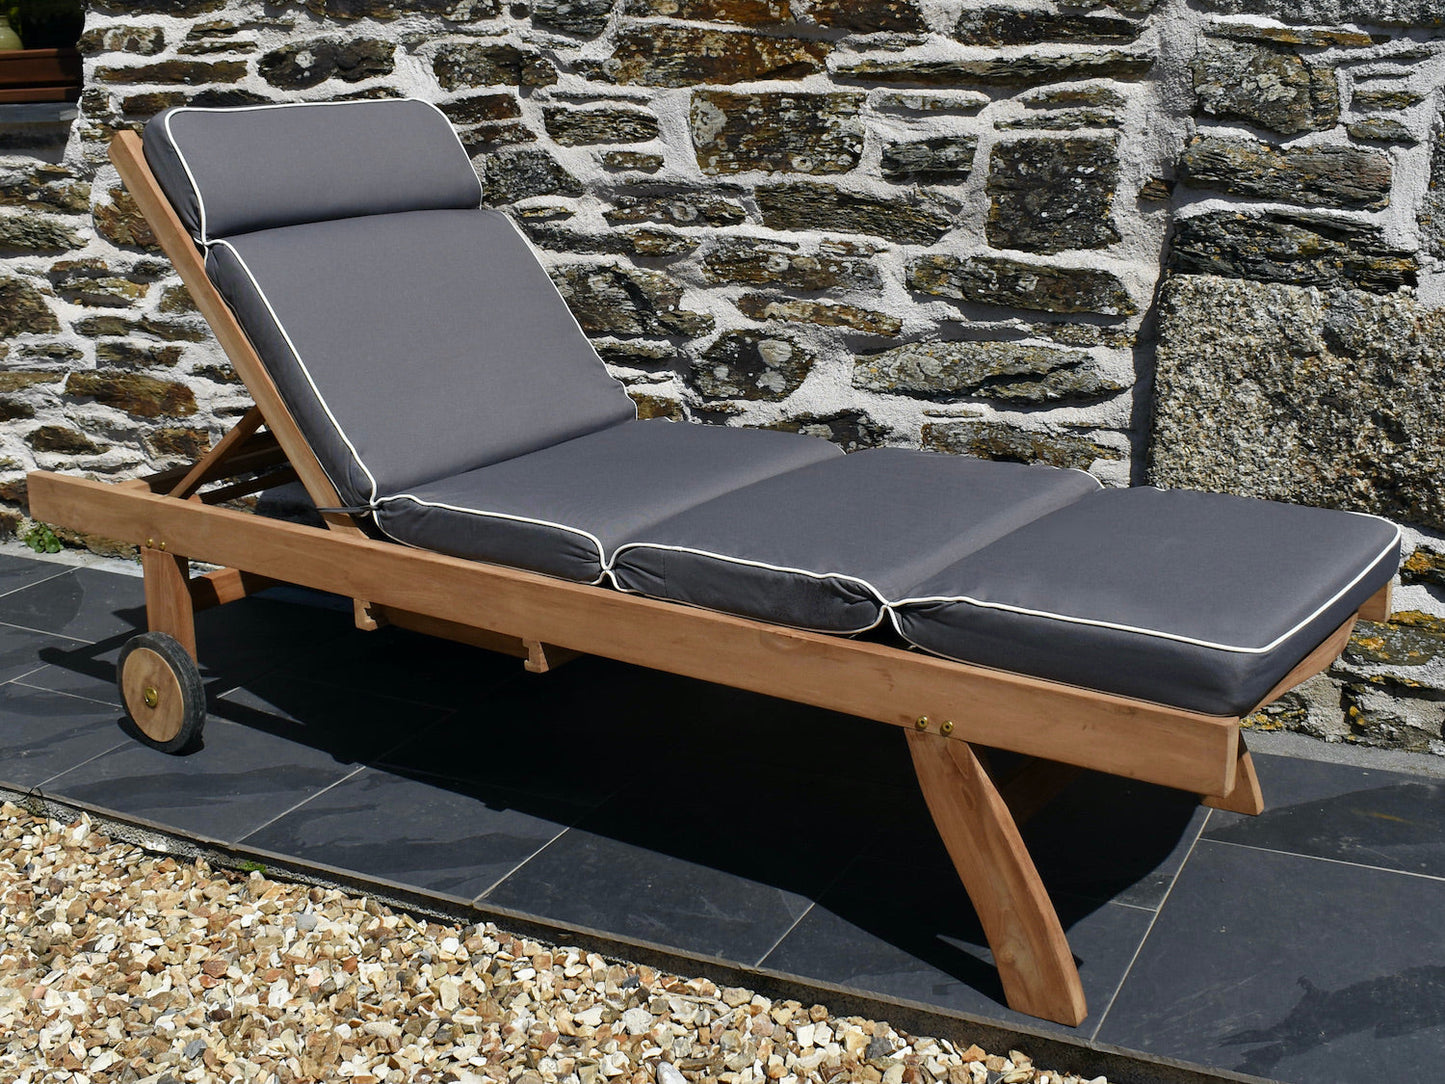 Luxury grey colour outdoor cushion for a traditional garden sun lounger chair